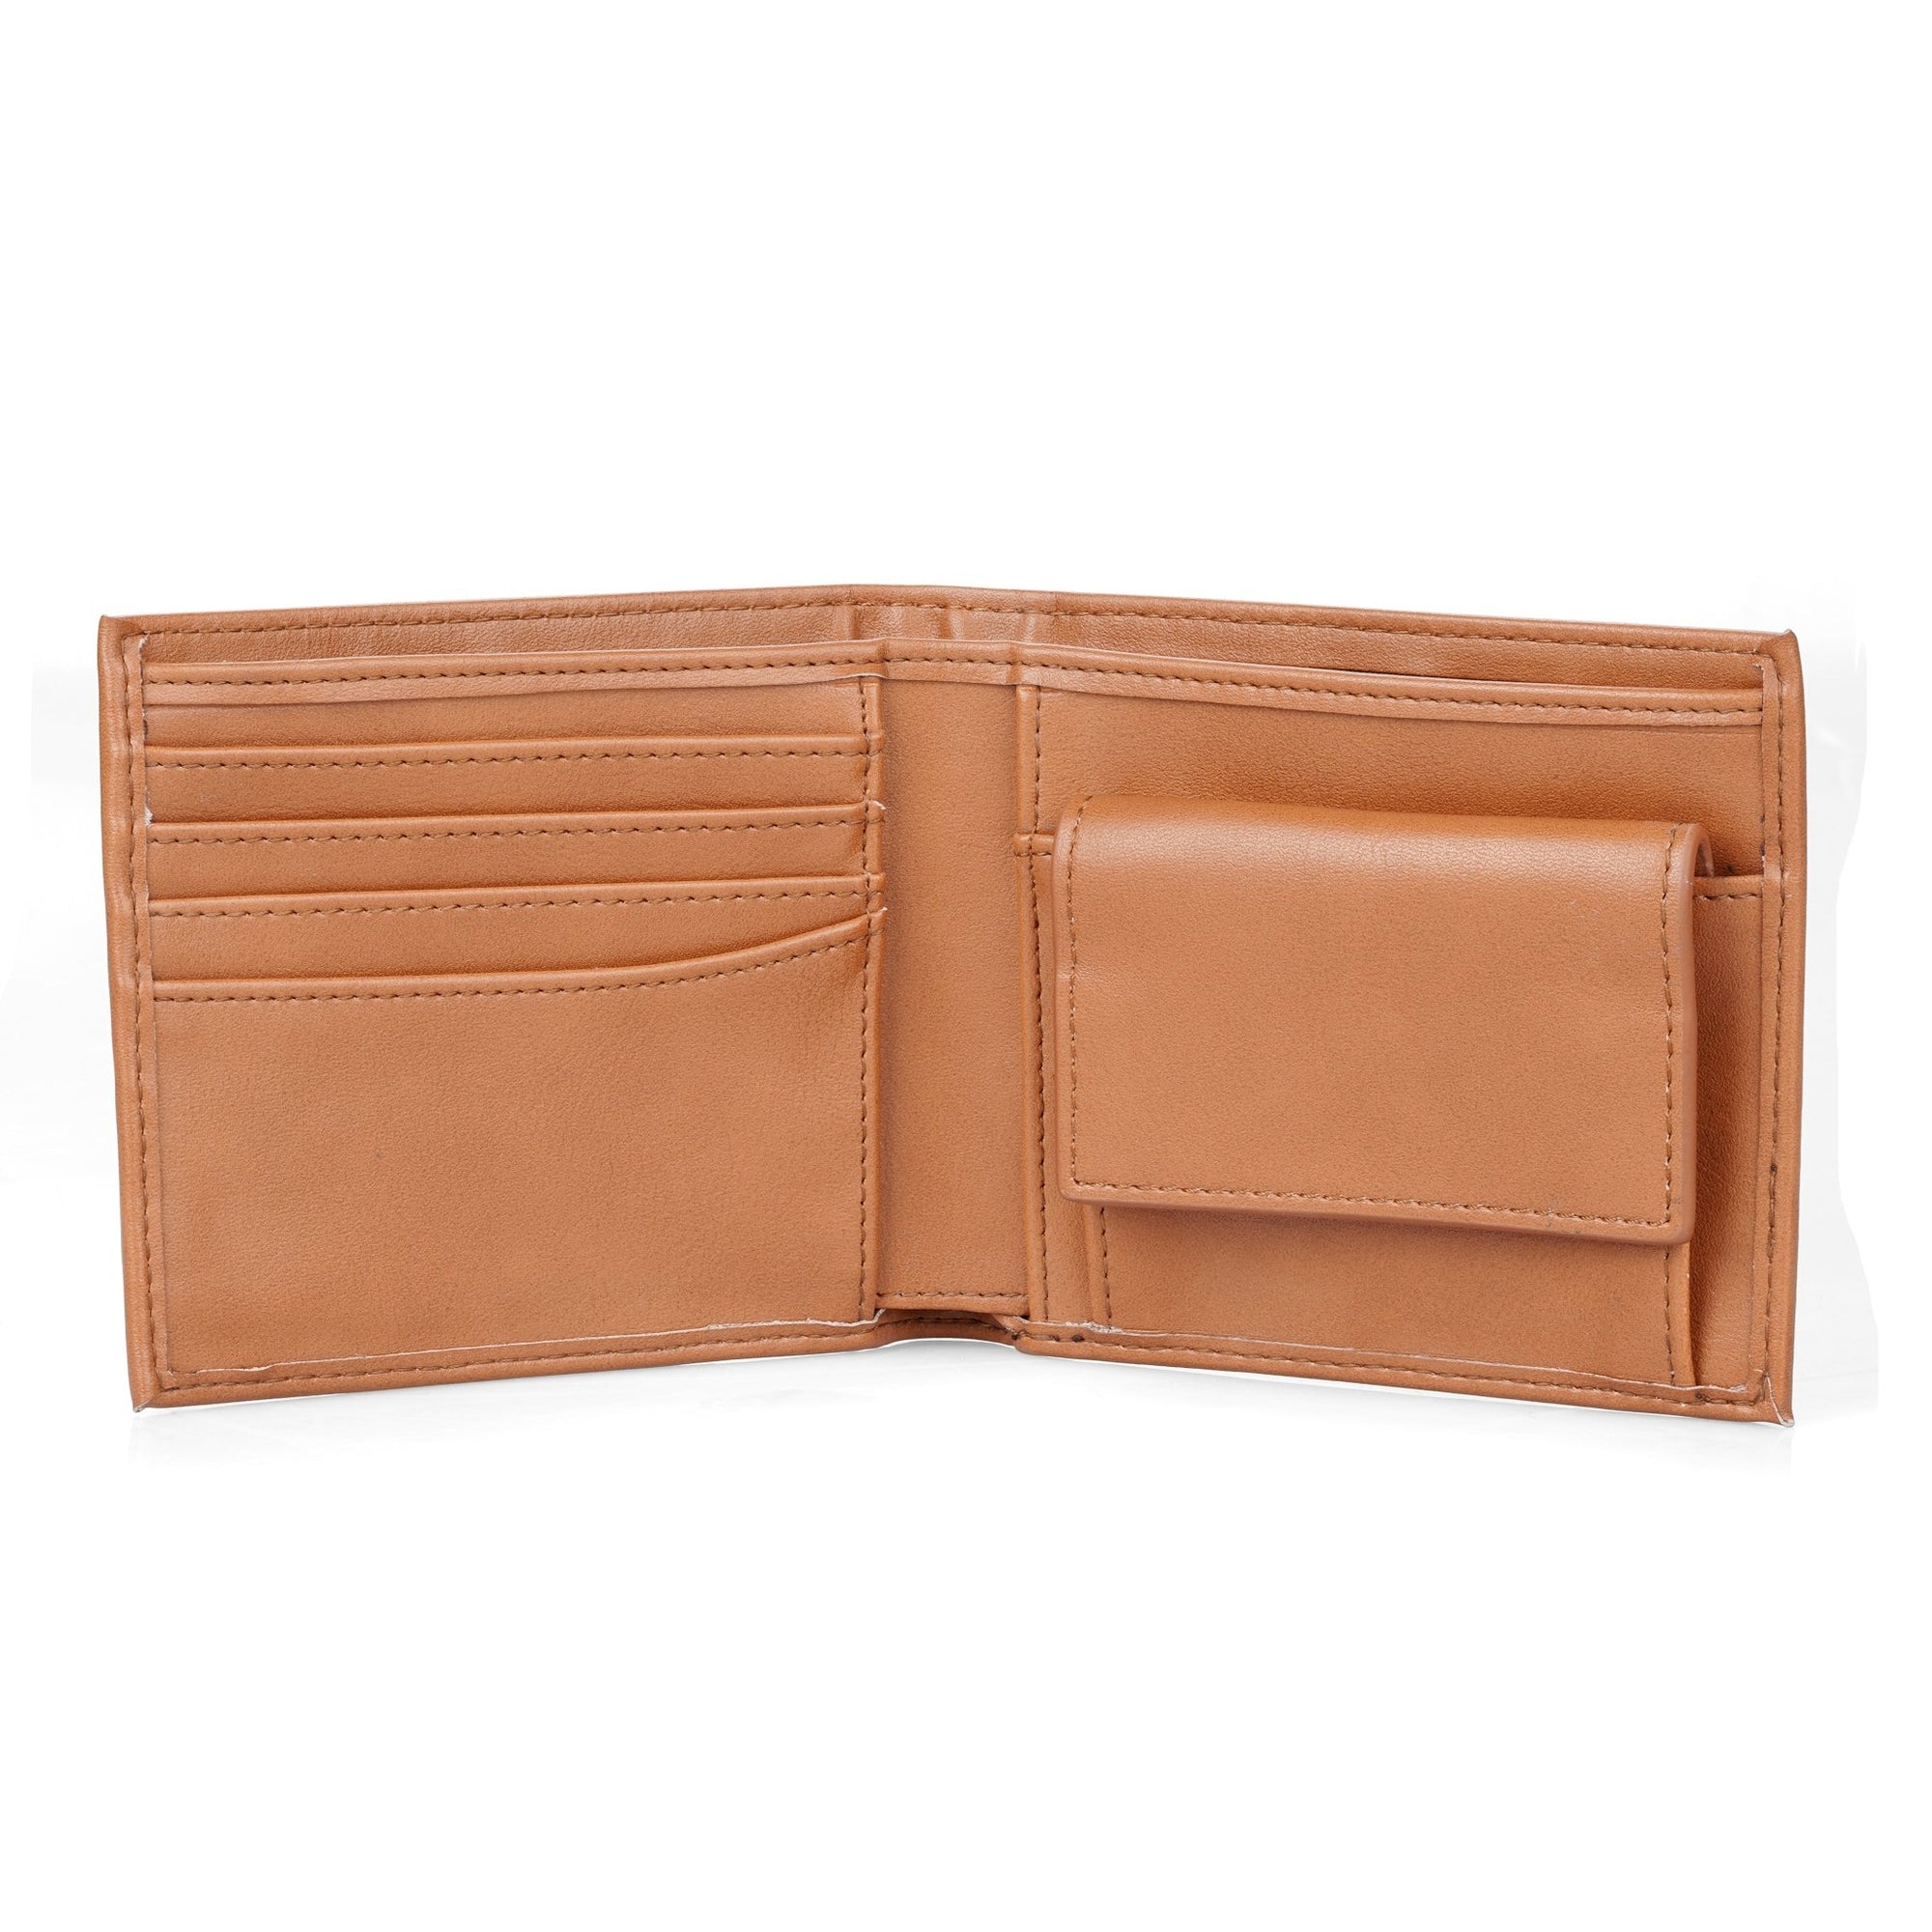 JP Men's Wallet Tan